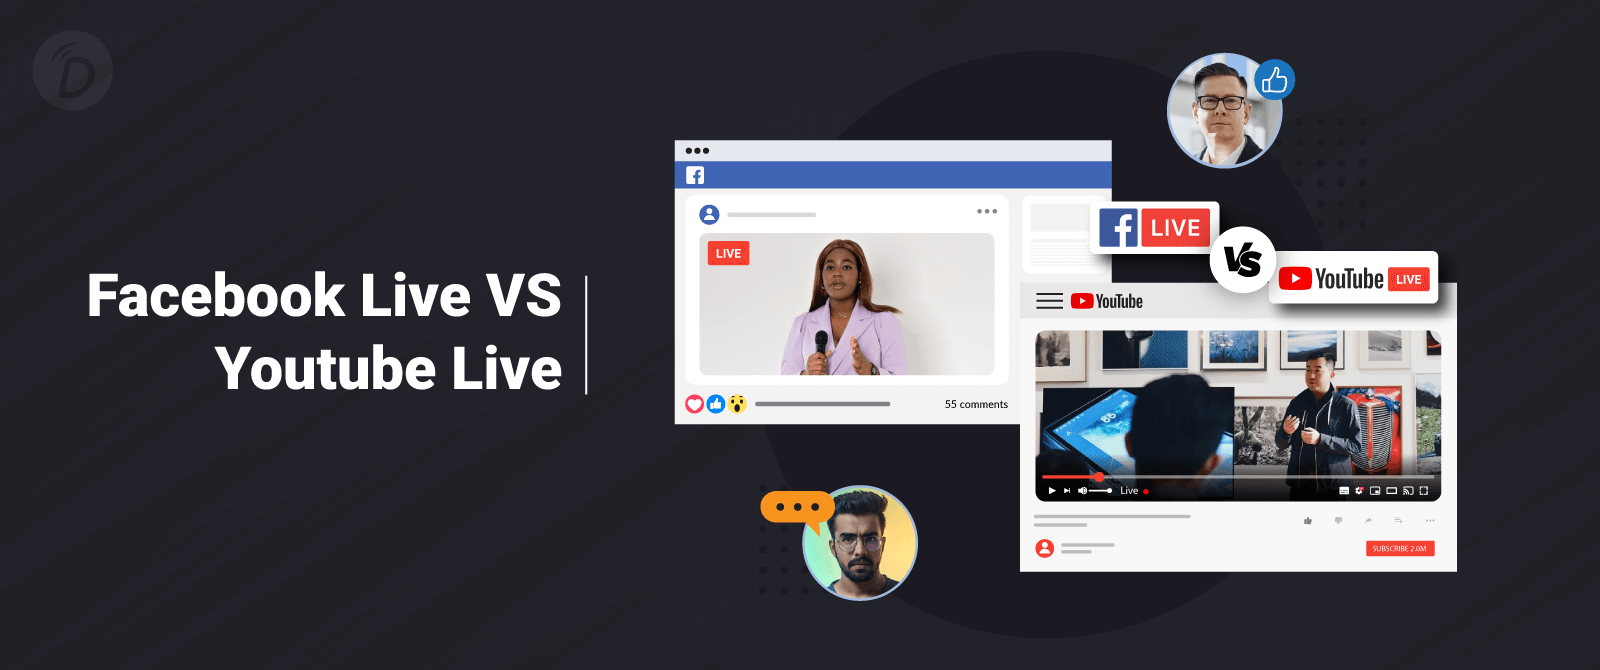 Facebook Live VS Youtube Live